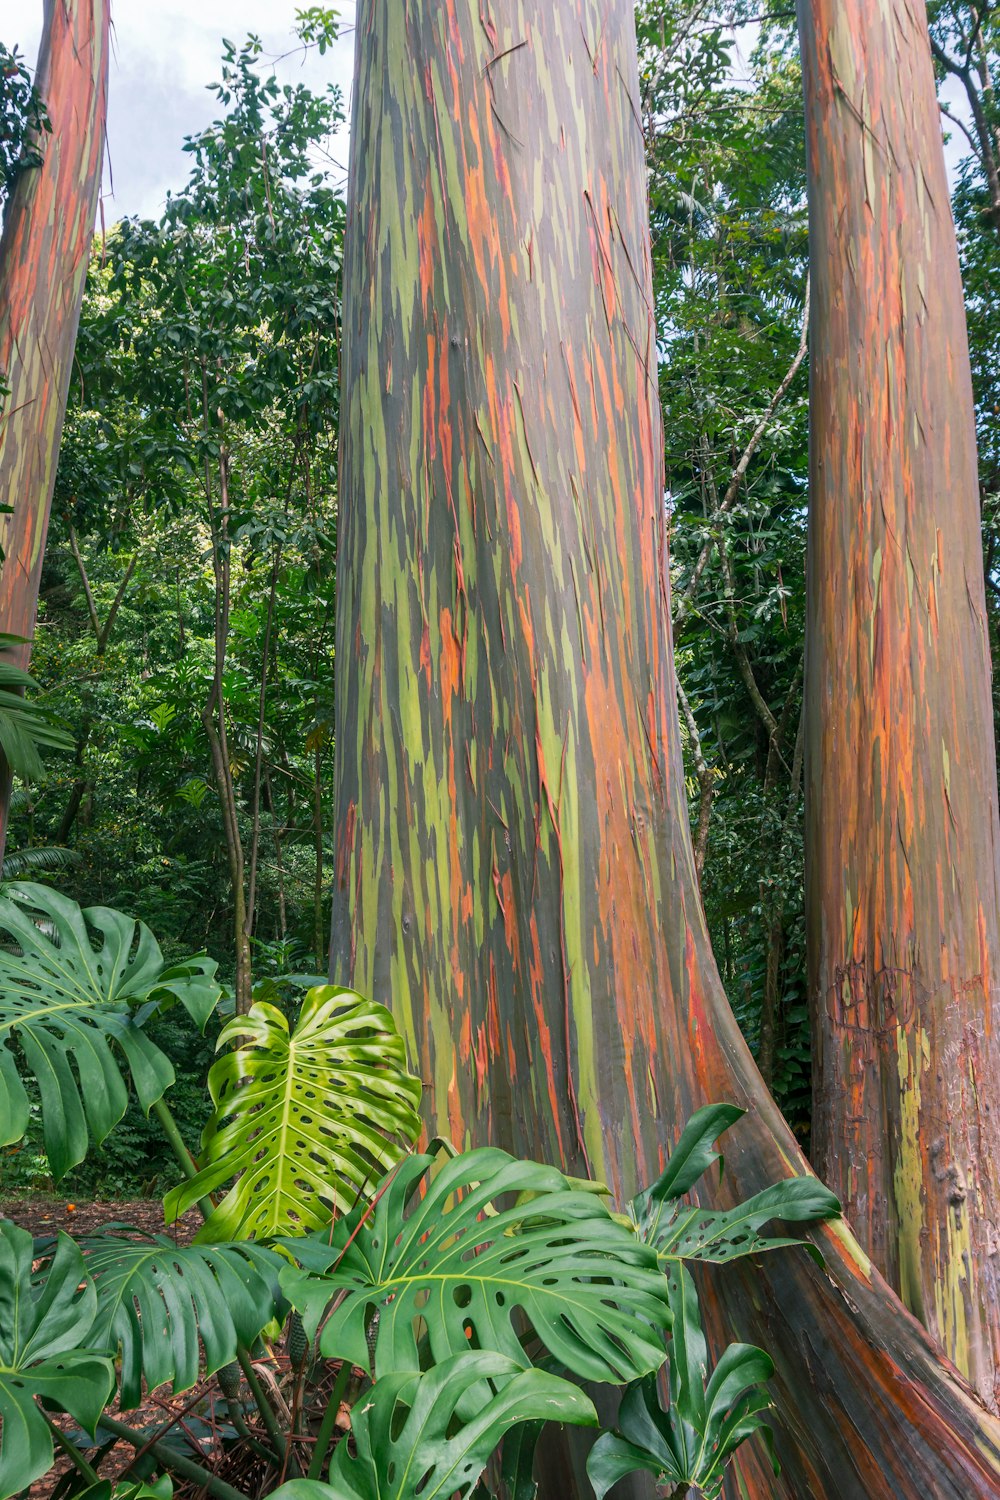 Un grupo de árboles con un tronco grande